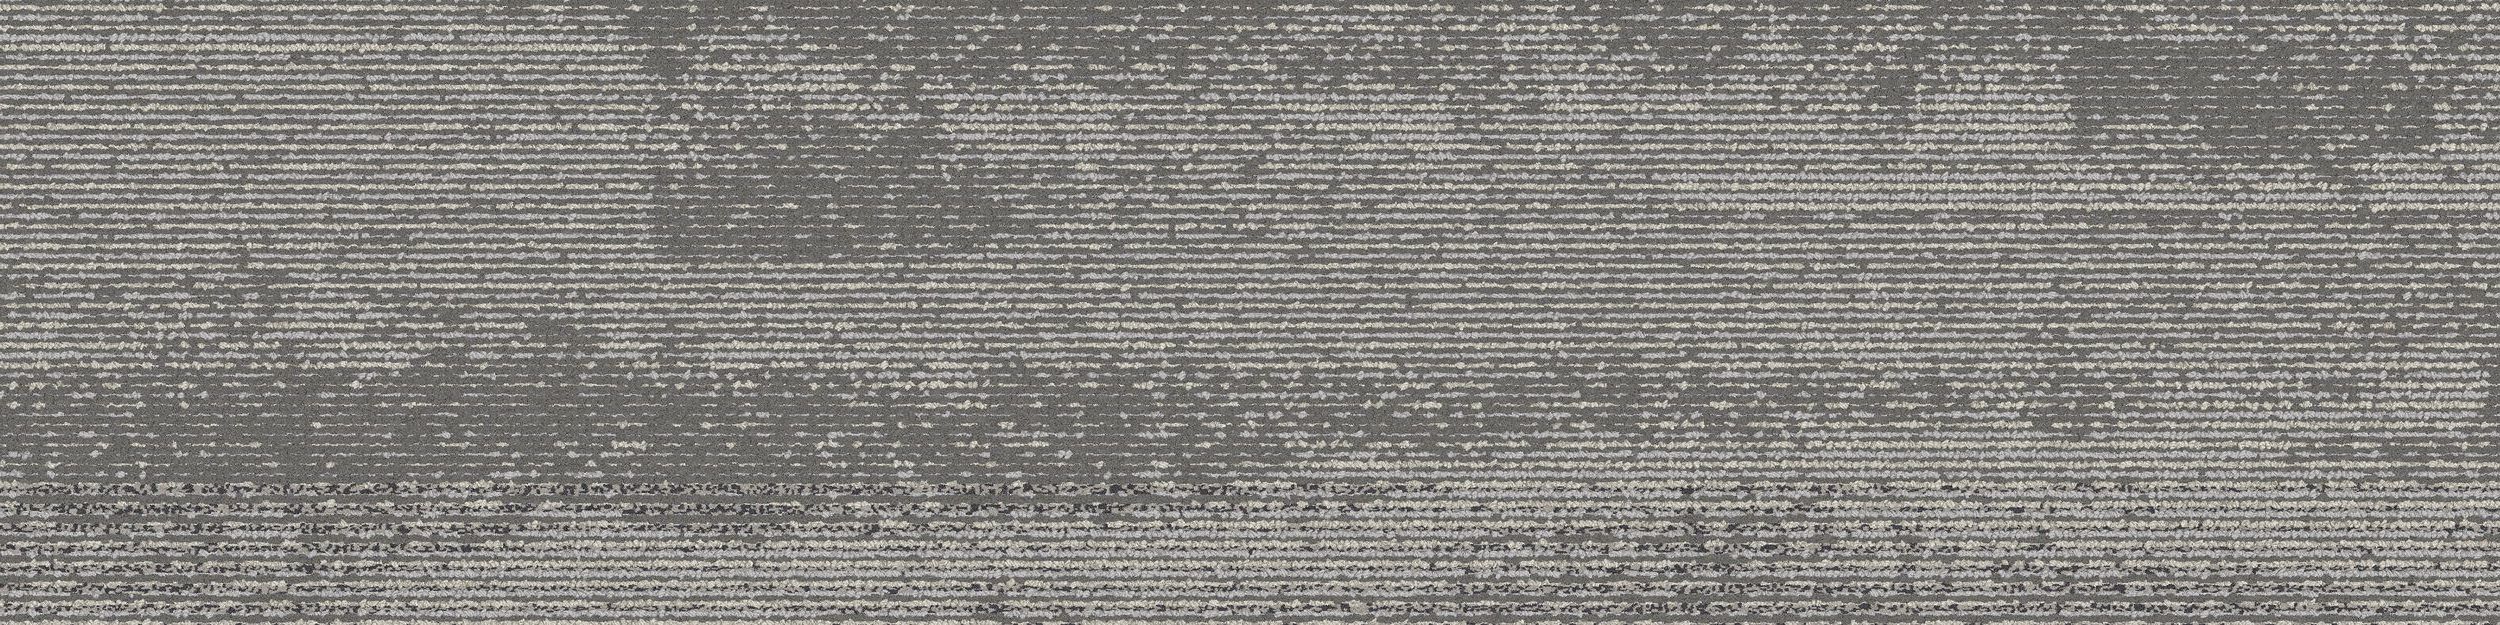 CT112 Carpet Tile In Pewter imagen número 2